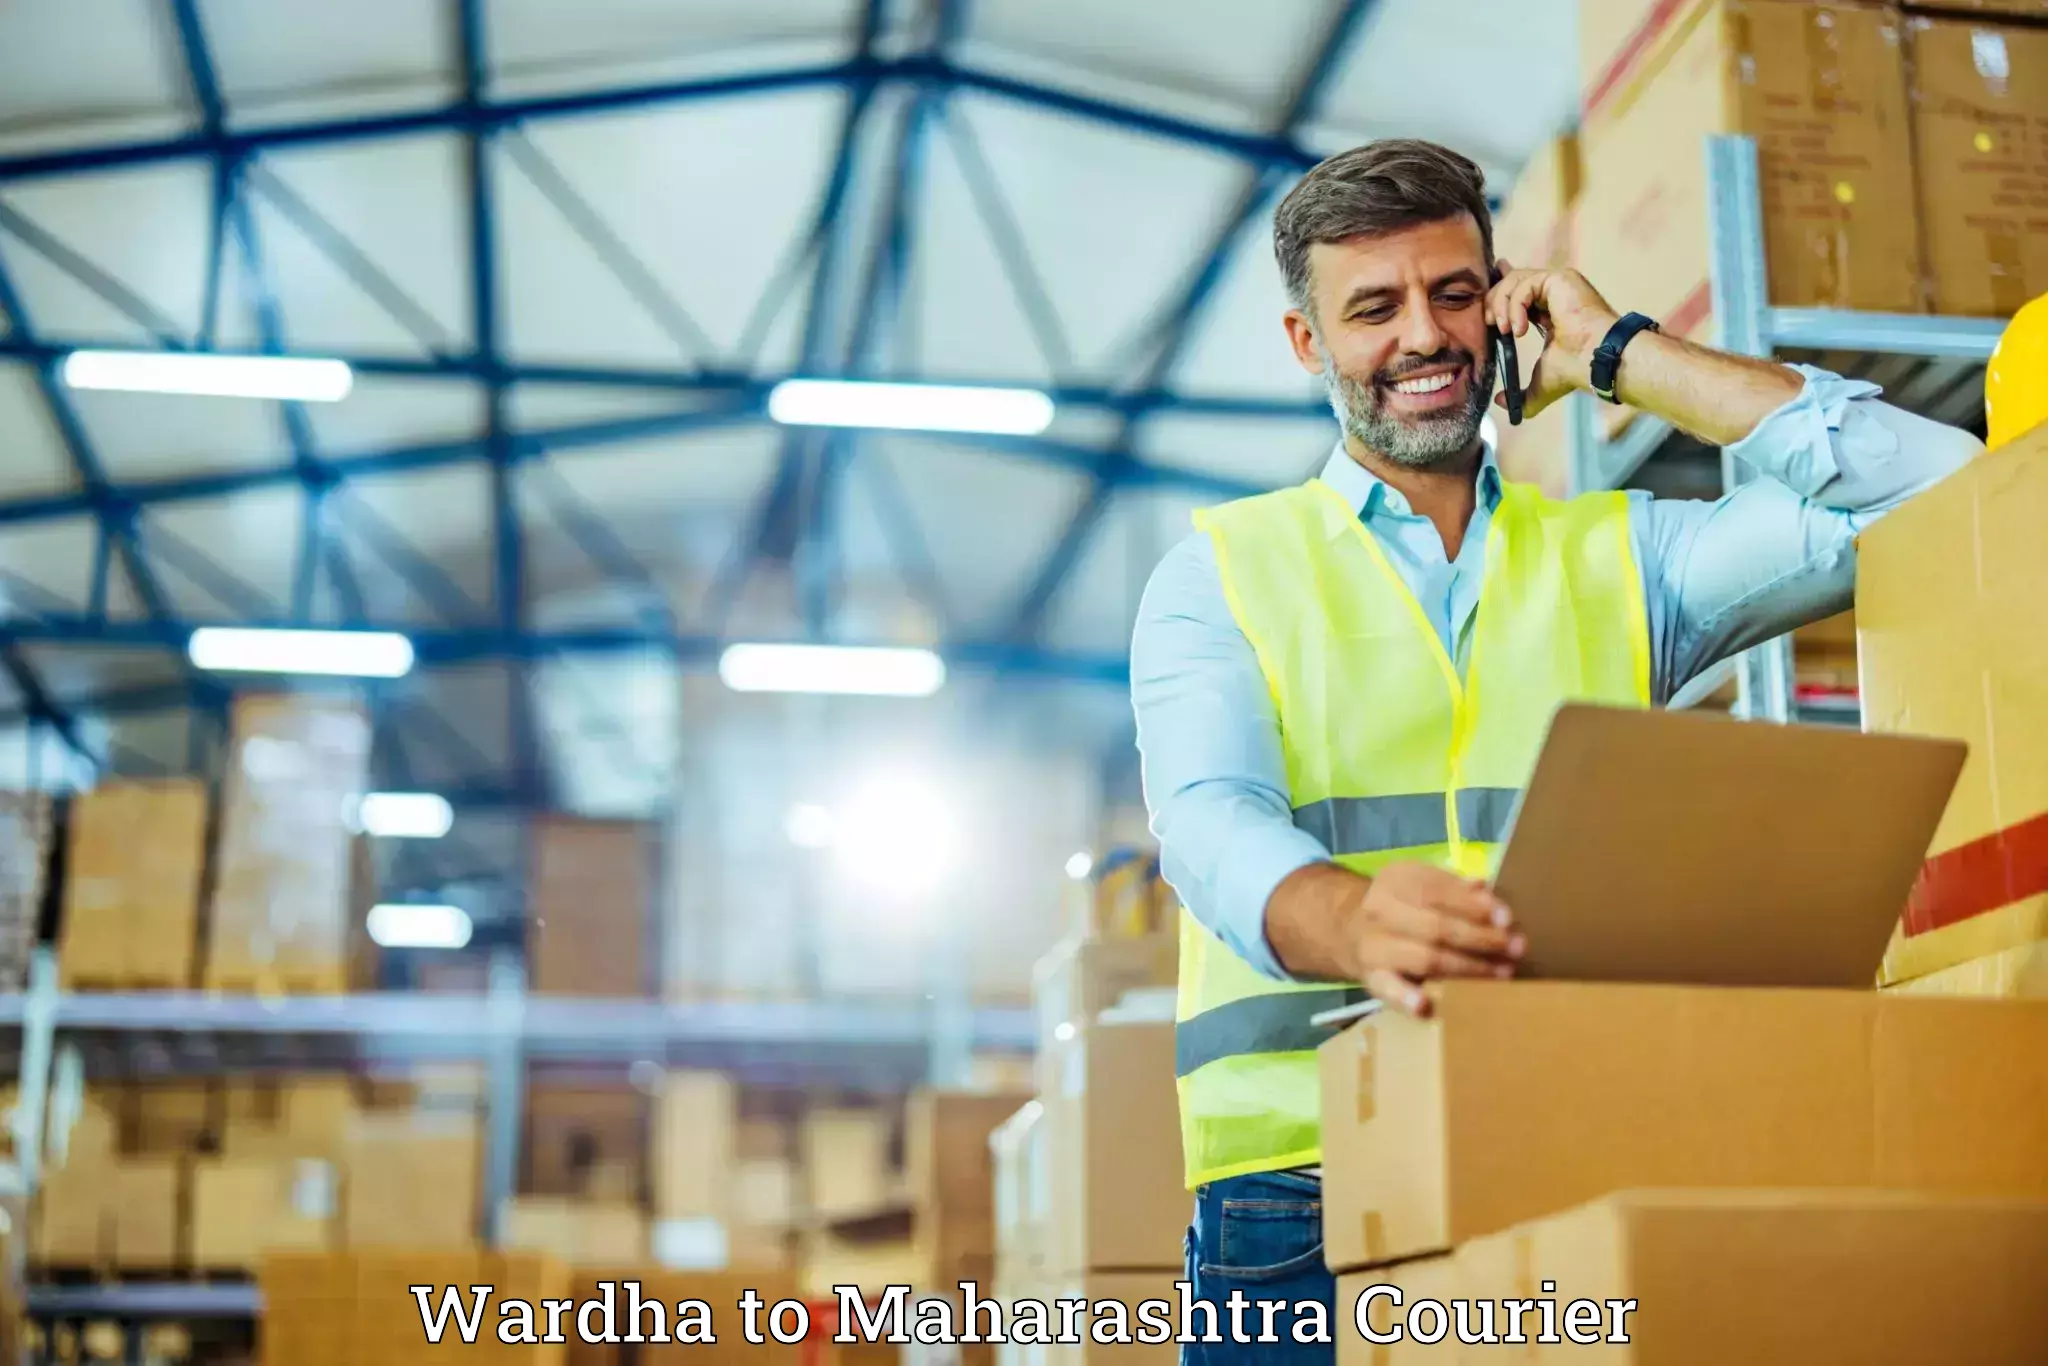 Luggage shipment specialists Wardha to Nandurbar